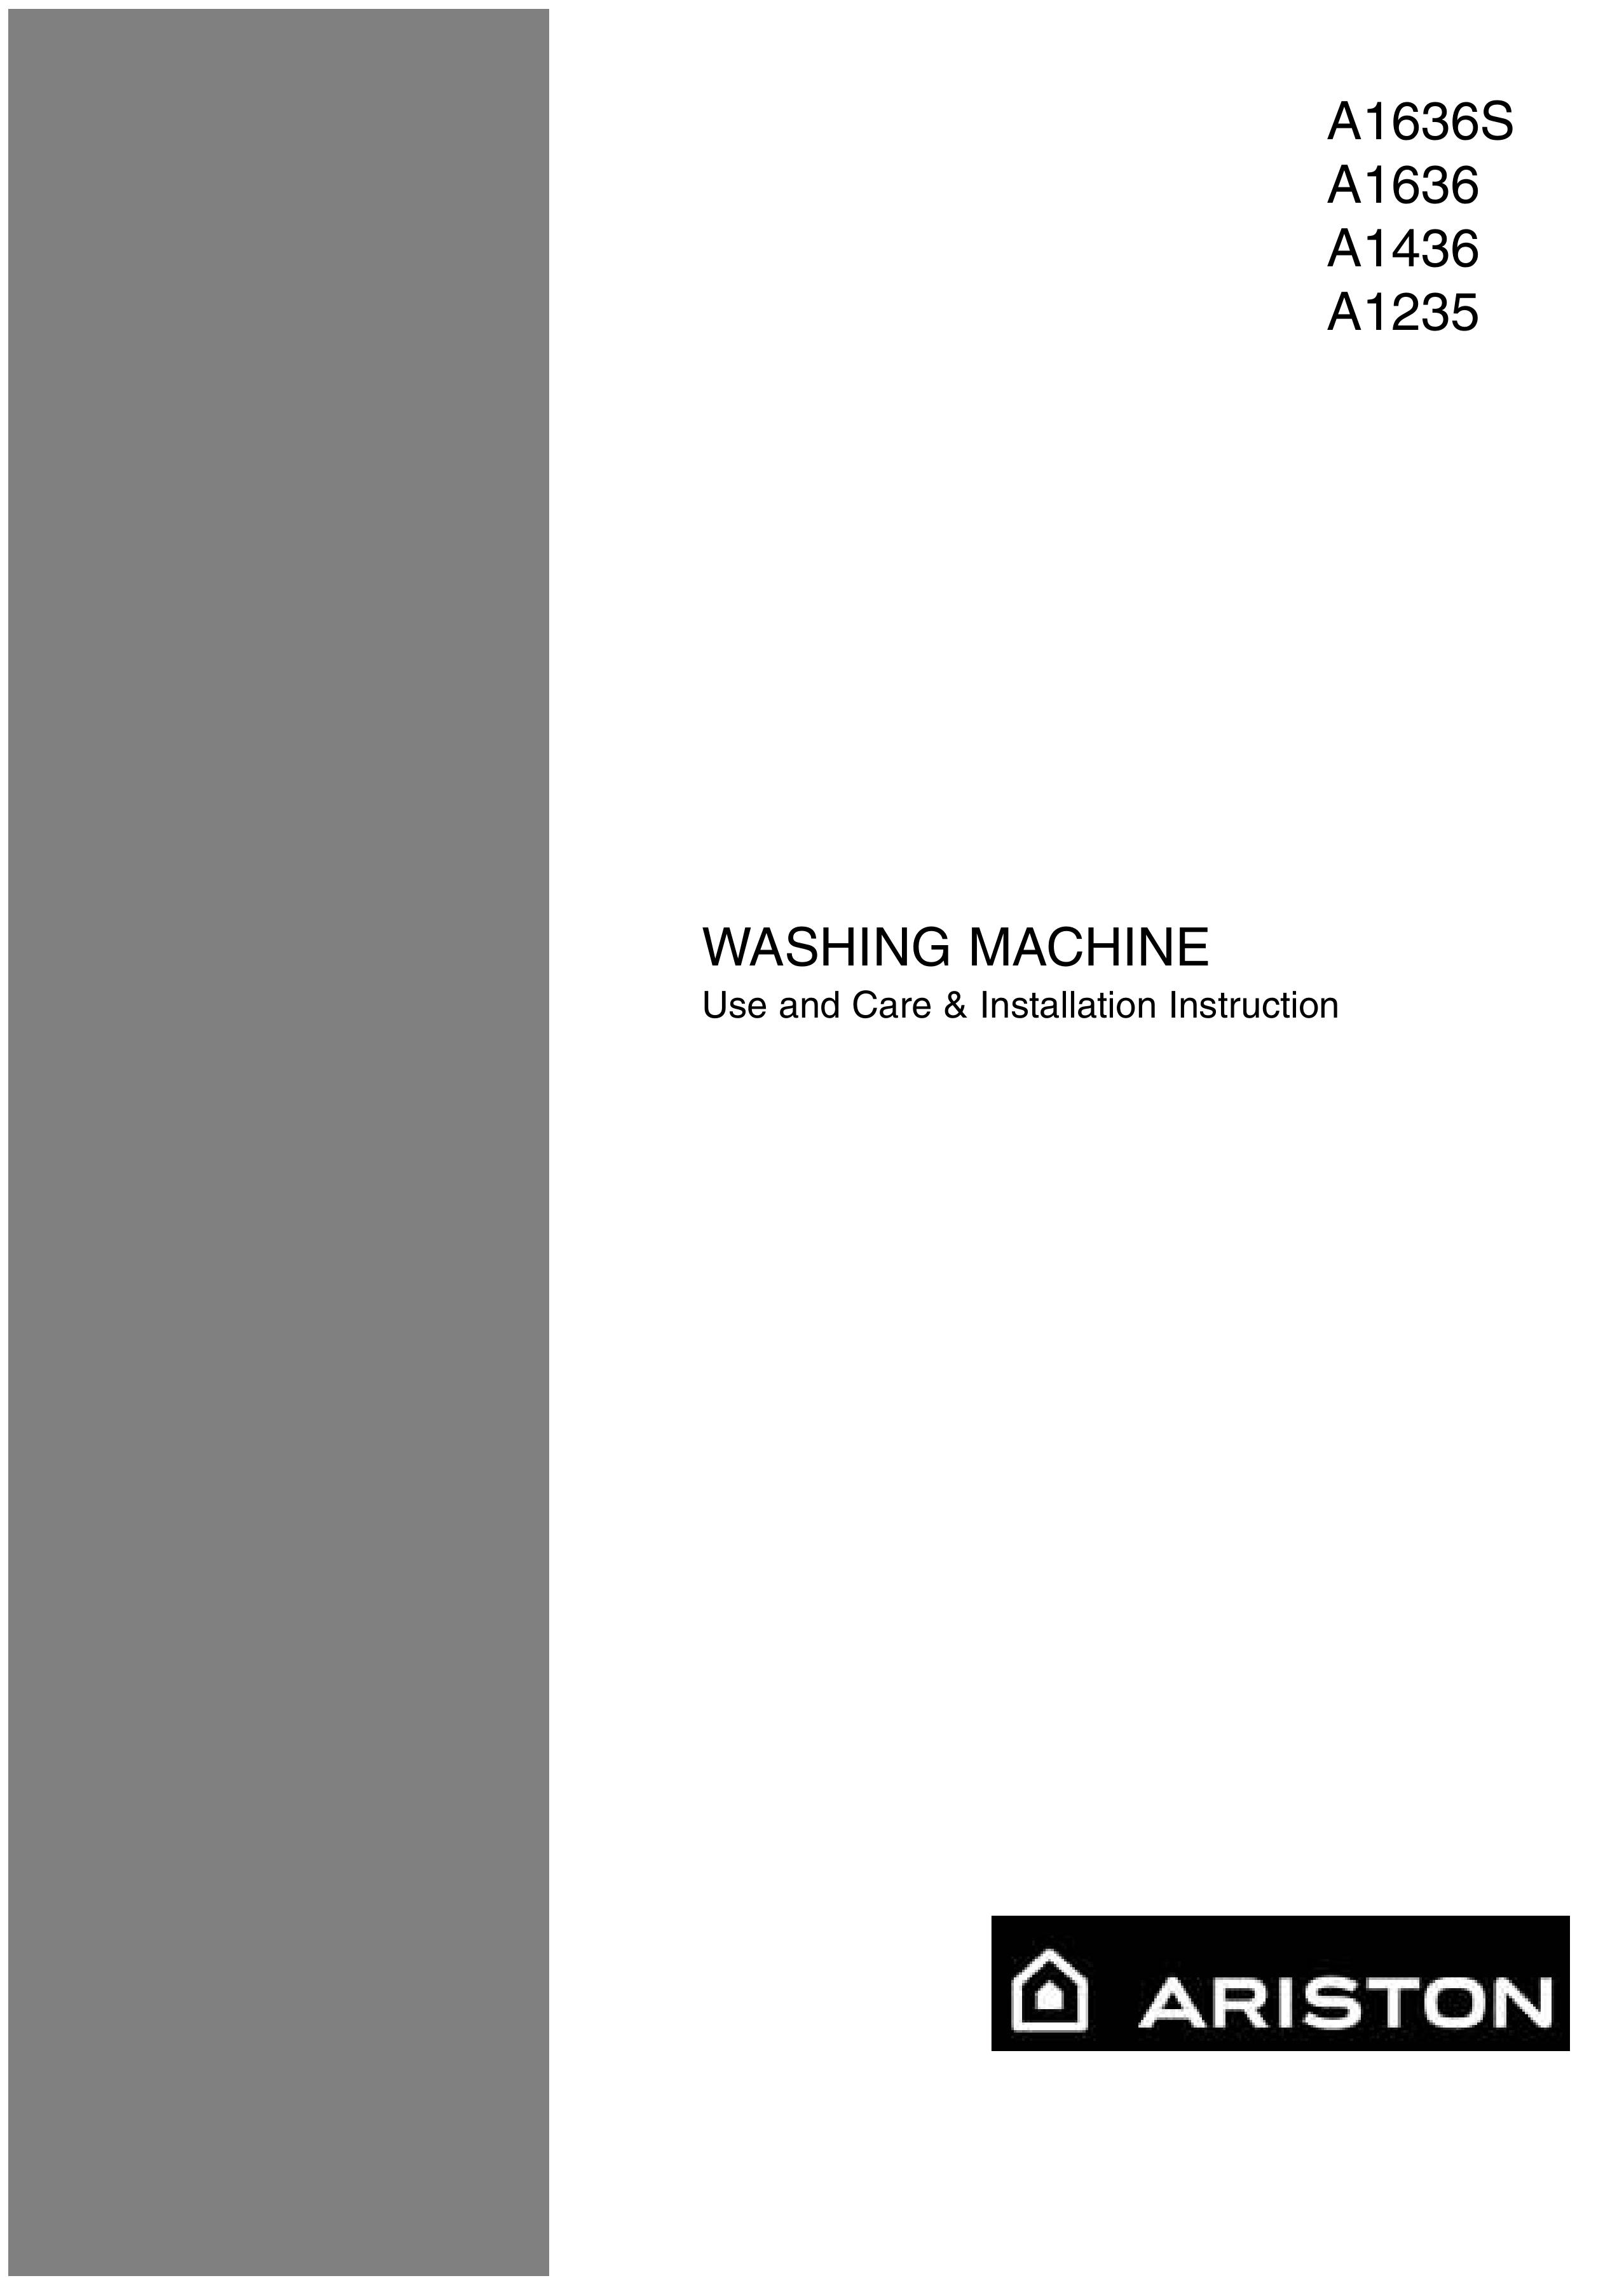 Ariston A1636S Washer User Manual